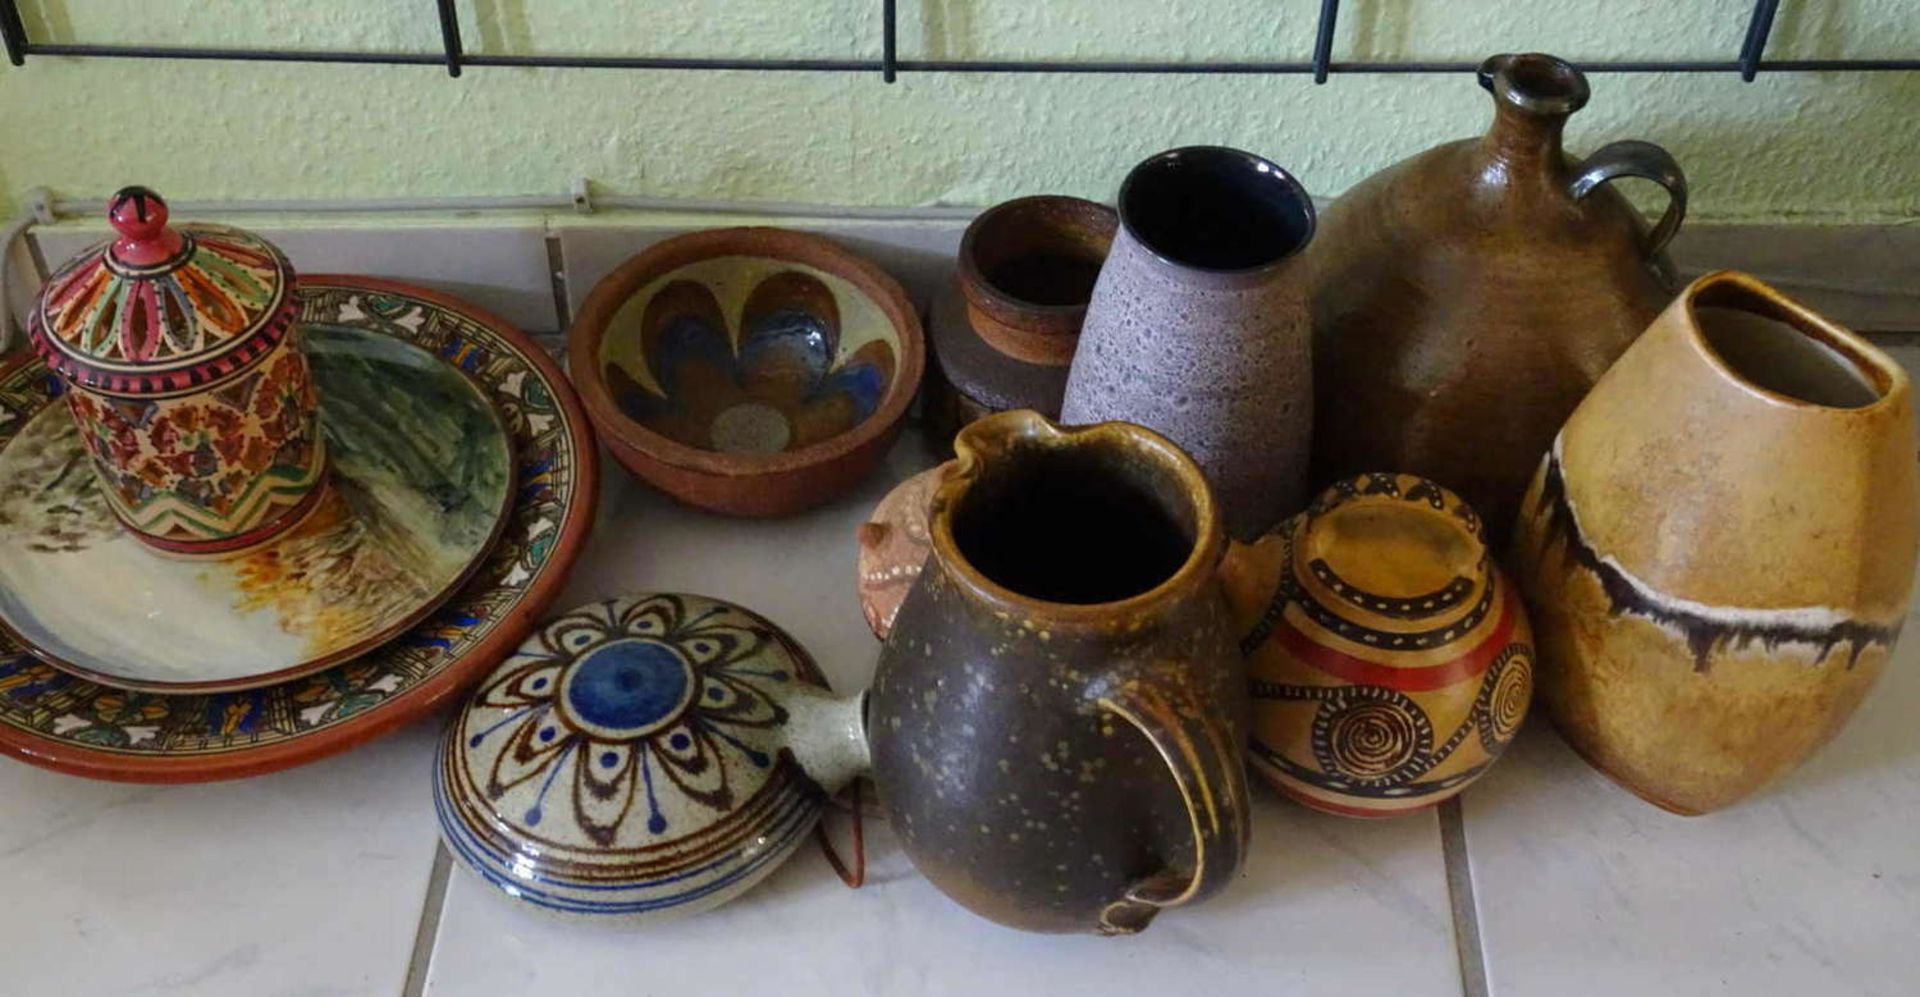 Lot Keramik, dabei: Vasen, Krüge aus HaushaltsauflösungLot ceramics, as well: vases, pitchers from